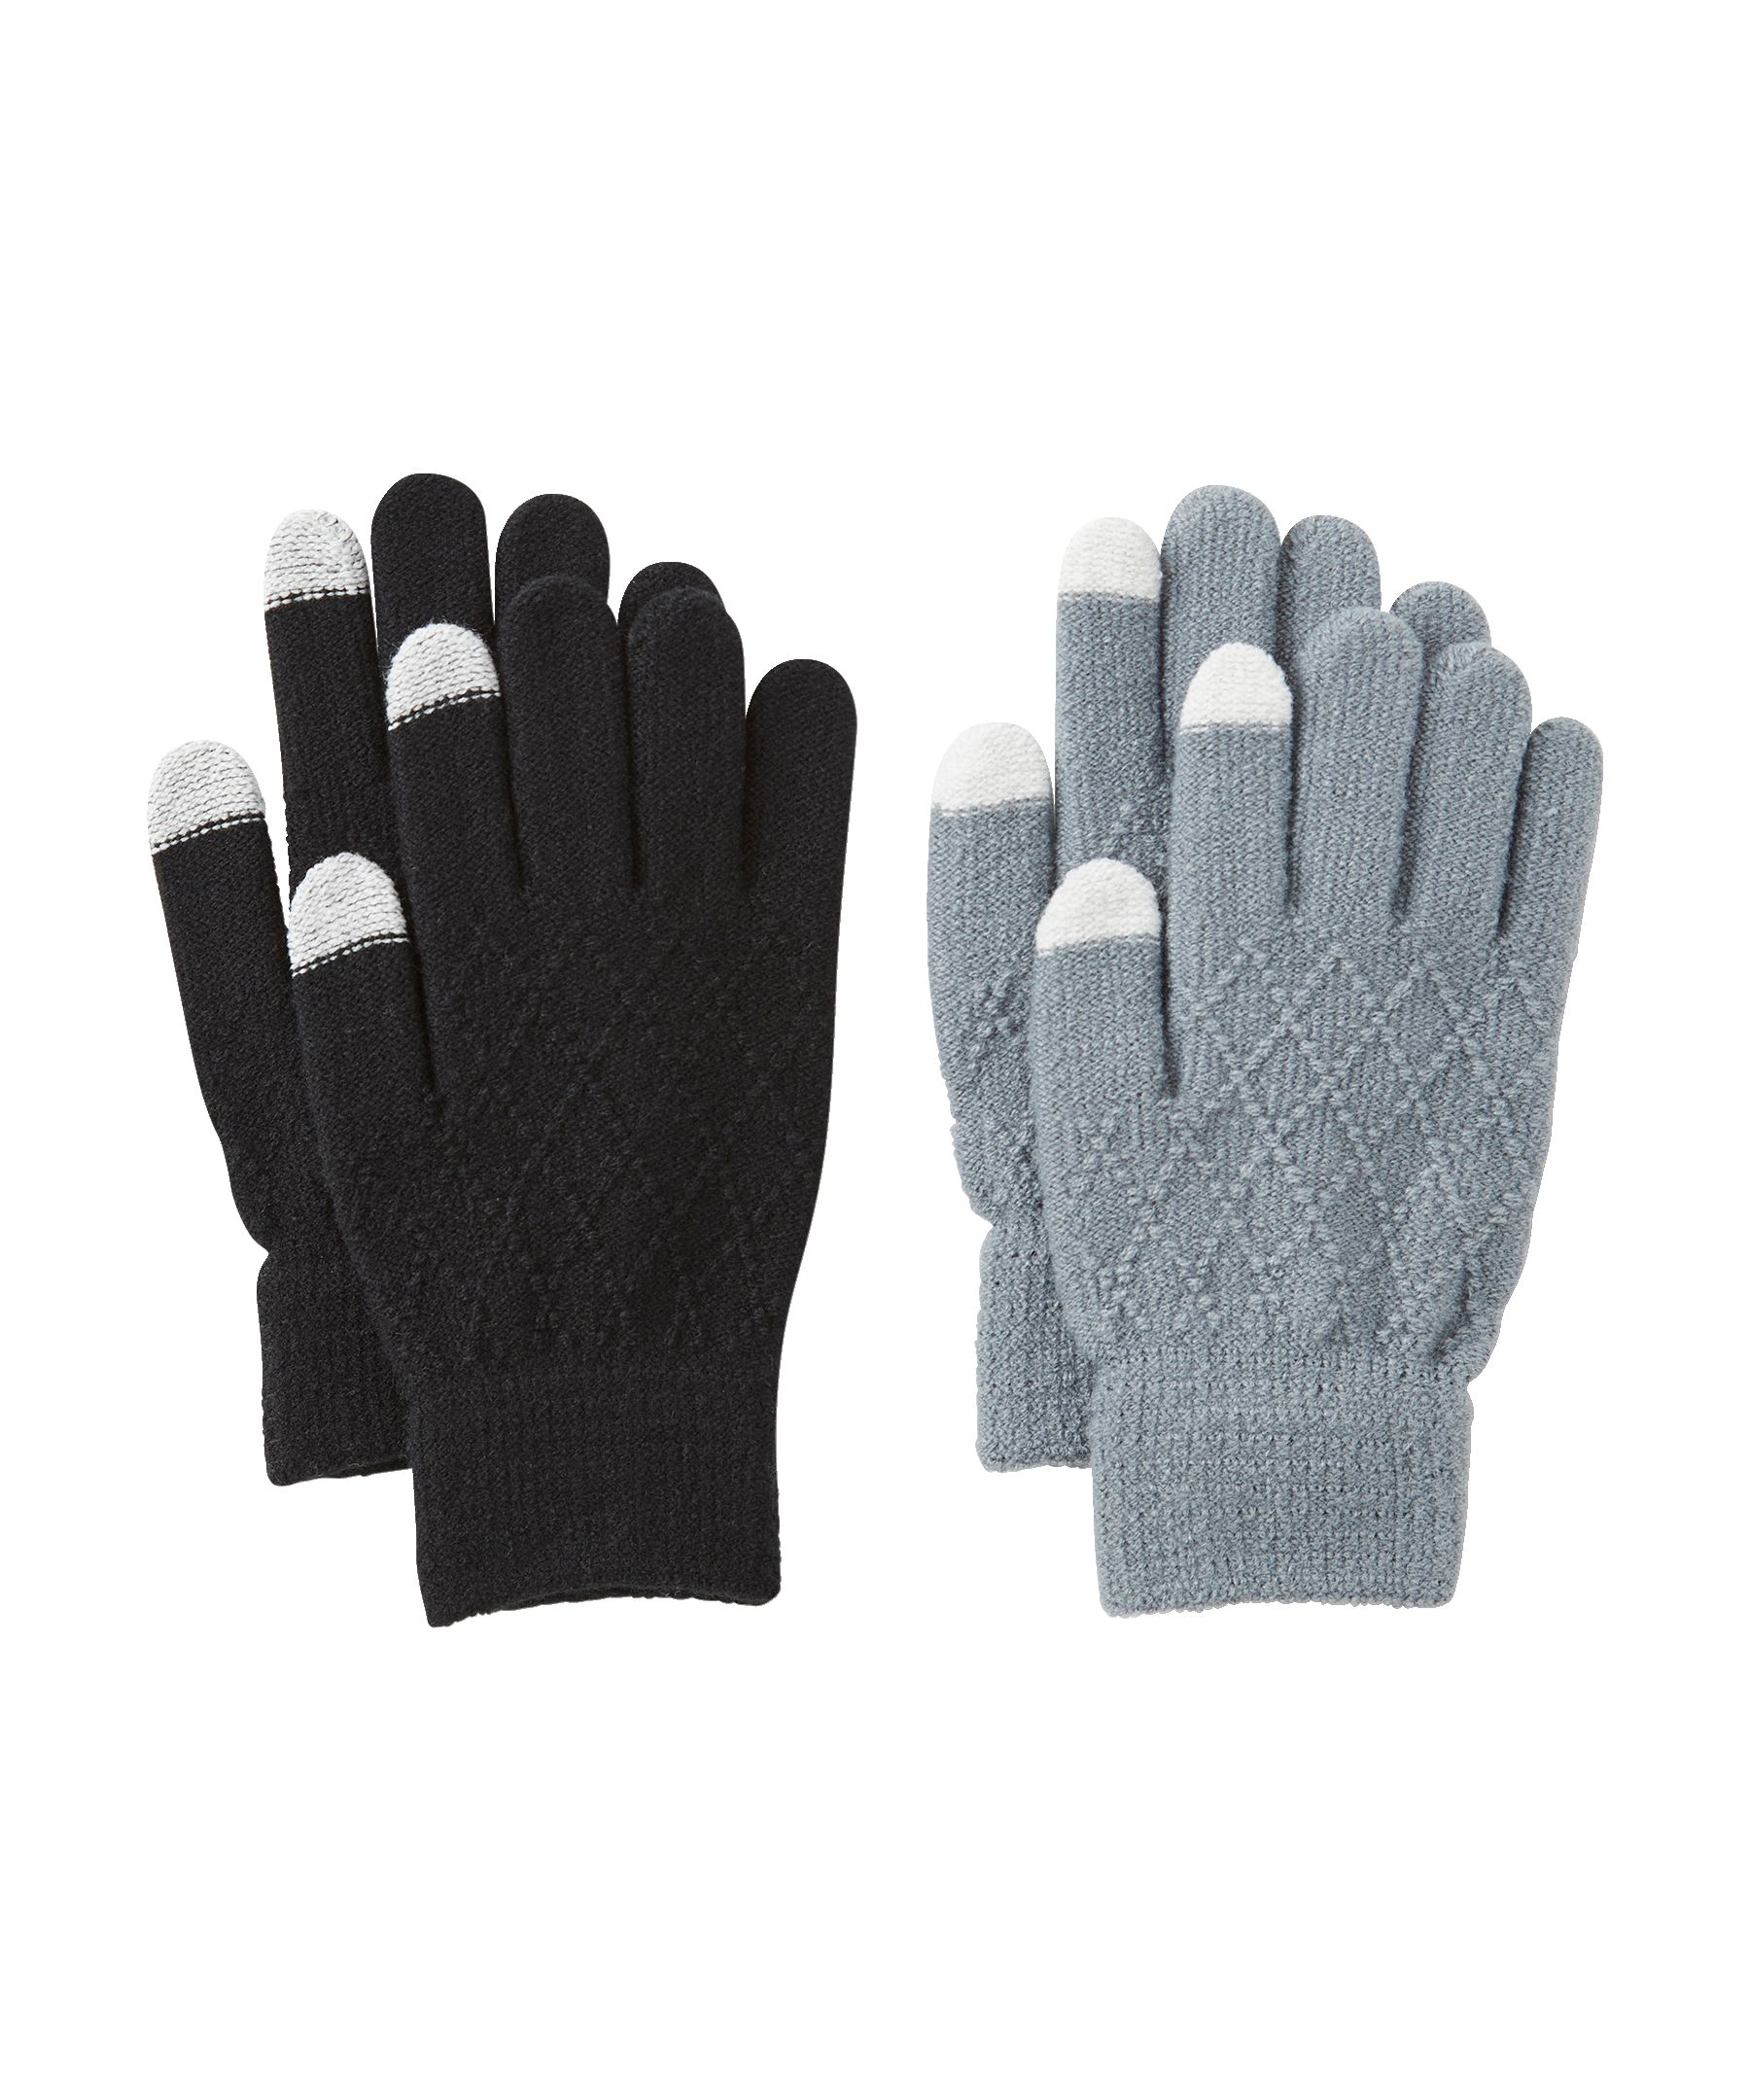 WORKPRO Safety Work Gloves, Pink Working Gloves for Women Men, Touch